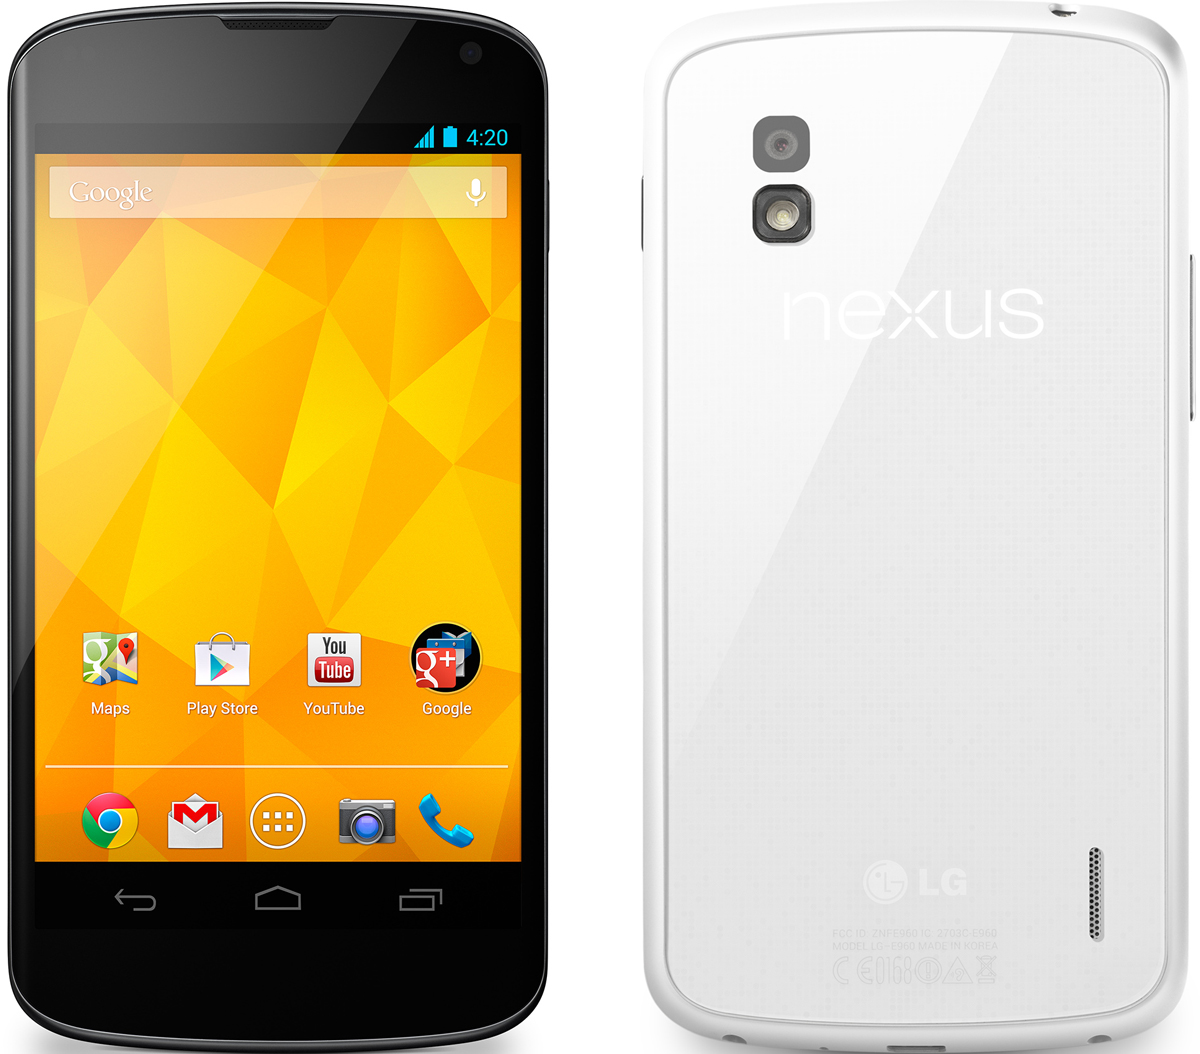 Nexus 4 full scale product image1